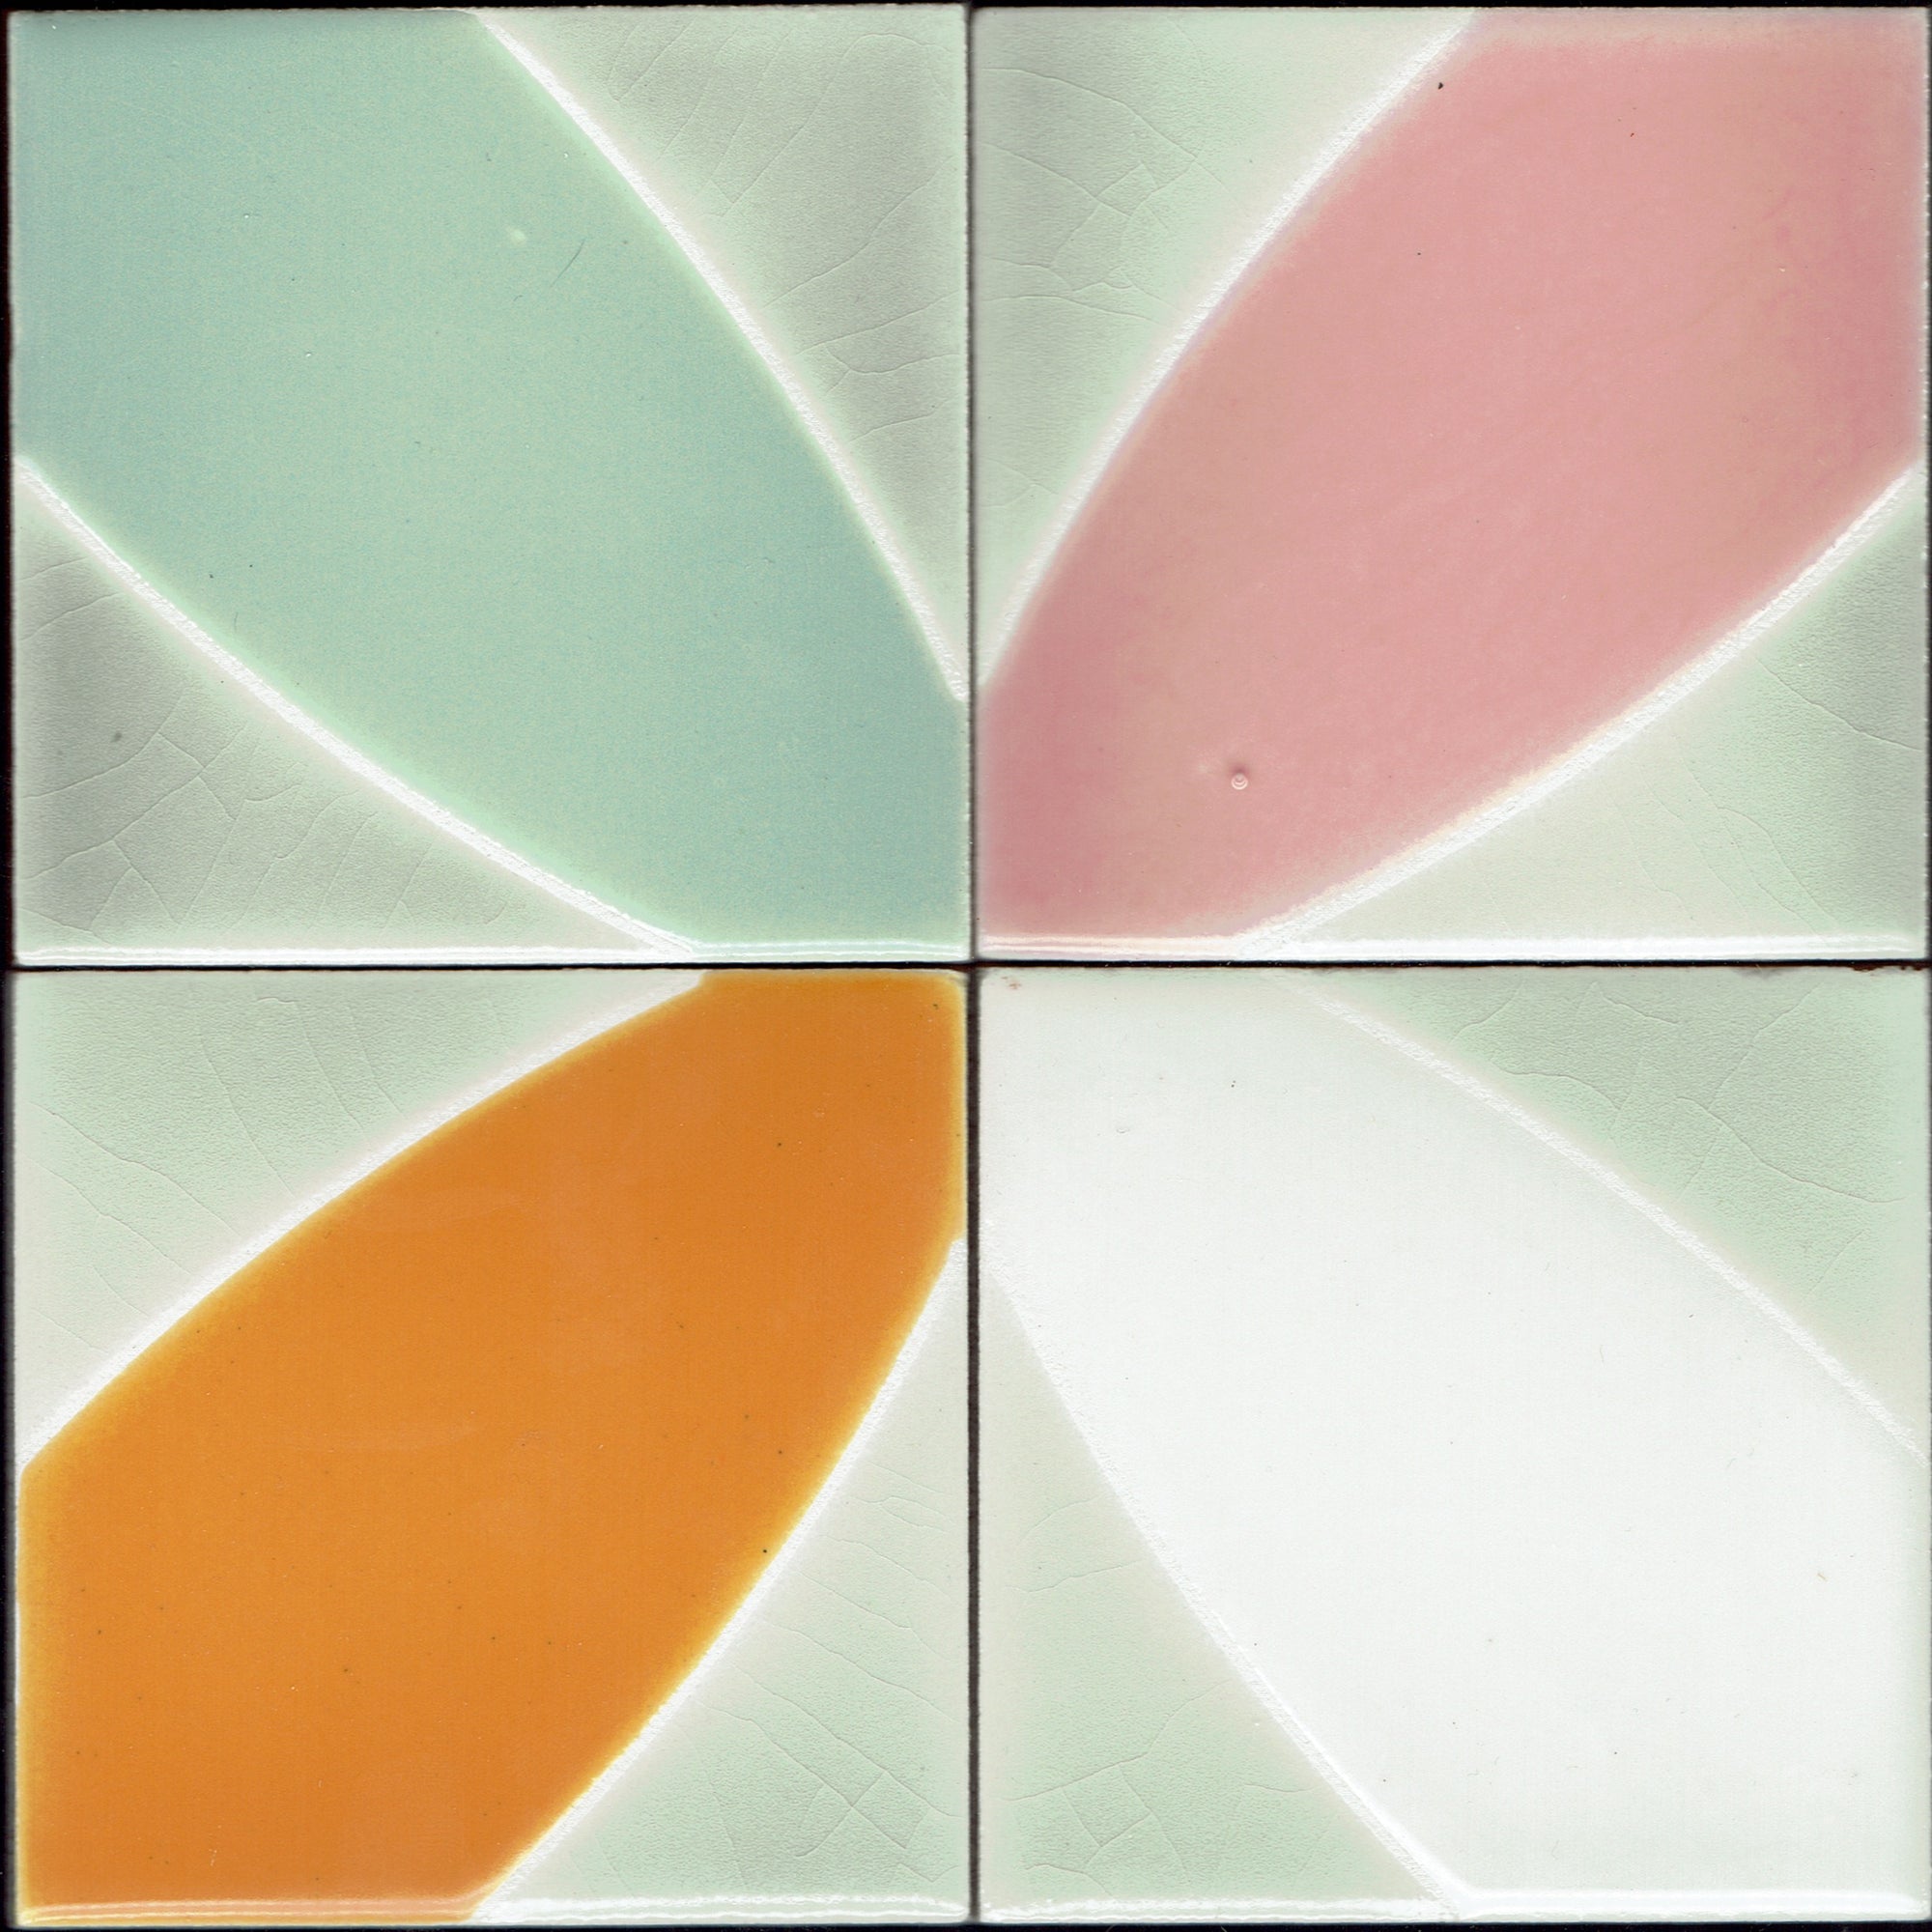 Folia Coasters: Set A (4"x4") - Handpainted Ceramic Tile Coasters for Kitchen, Bar, Bathroom, Wall & Table Decor